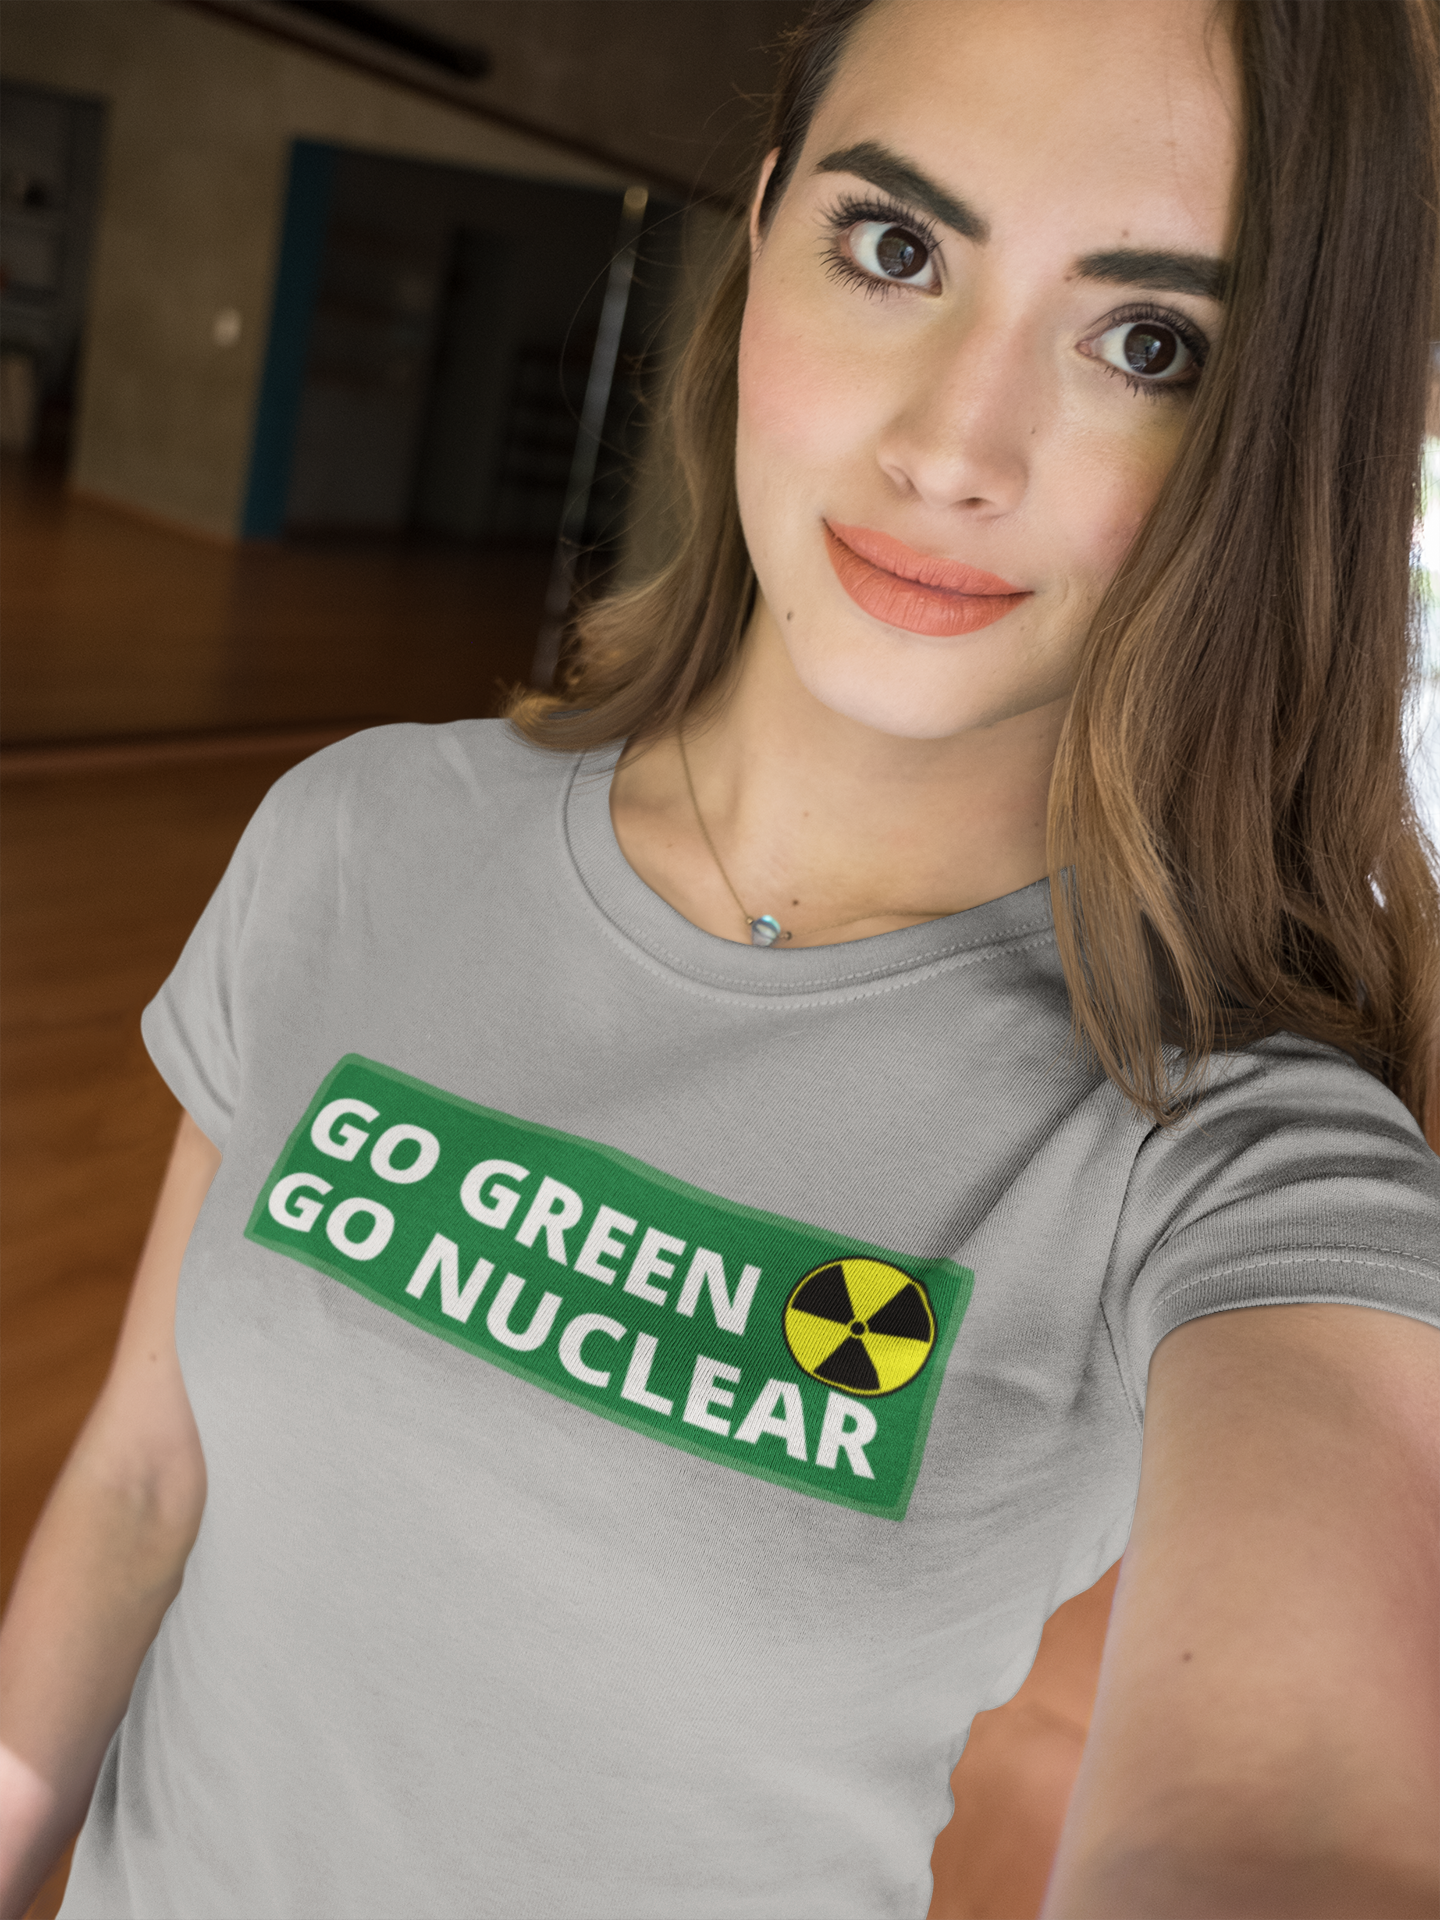 Go Green Go Nuclear T-Shirt Women